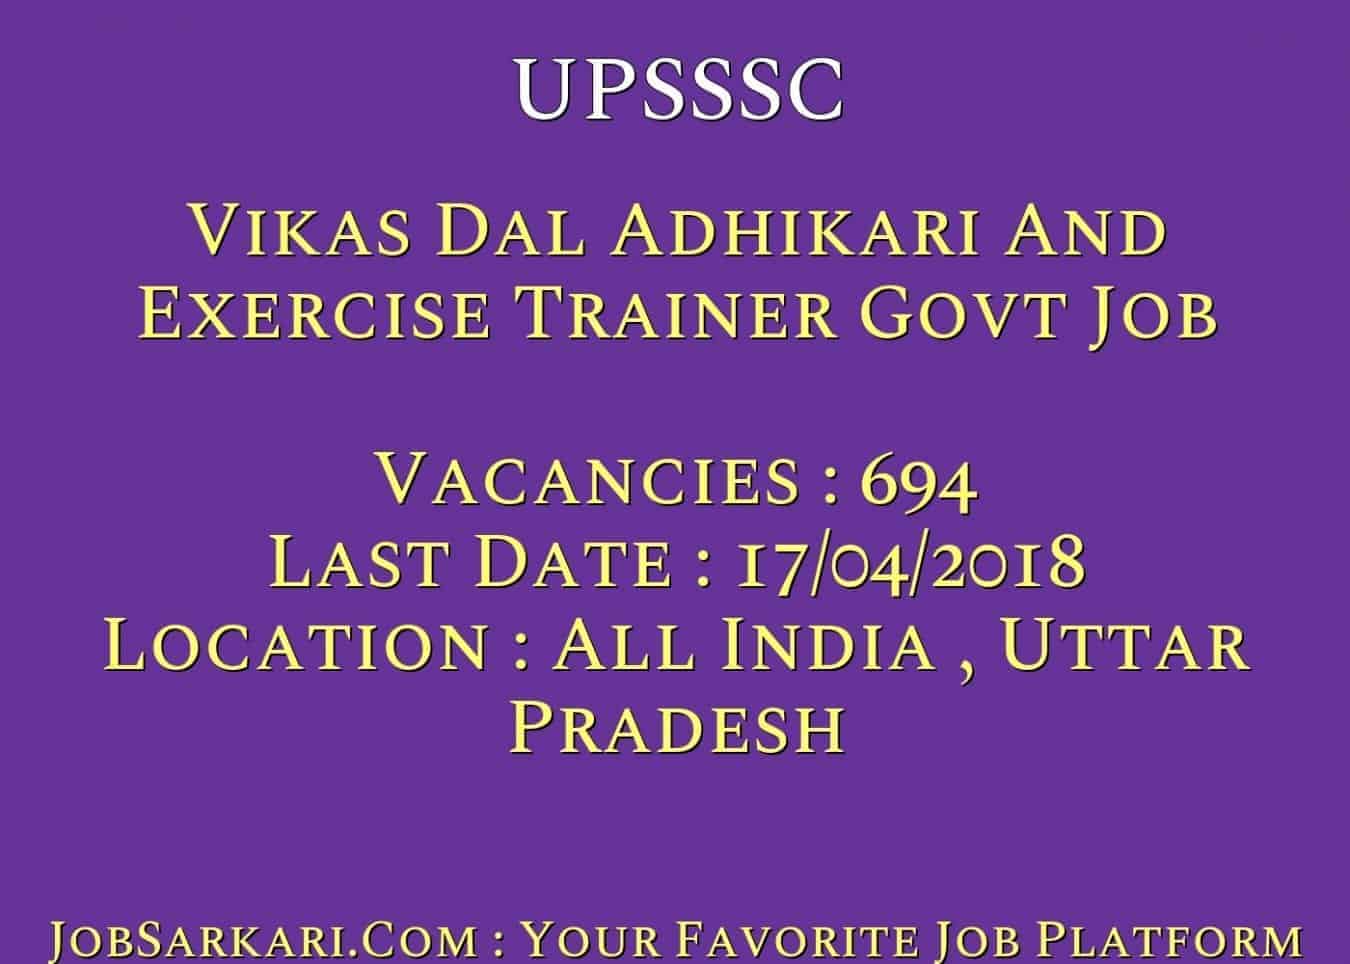 UPSSSC Recruitment 2018 For Vikas Dal Adhikari And Exercise Trainer Govt Job